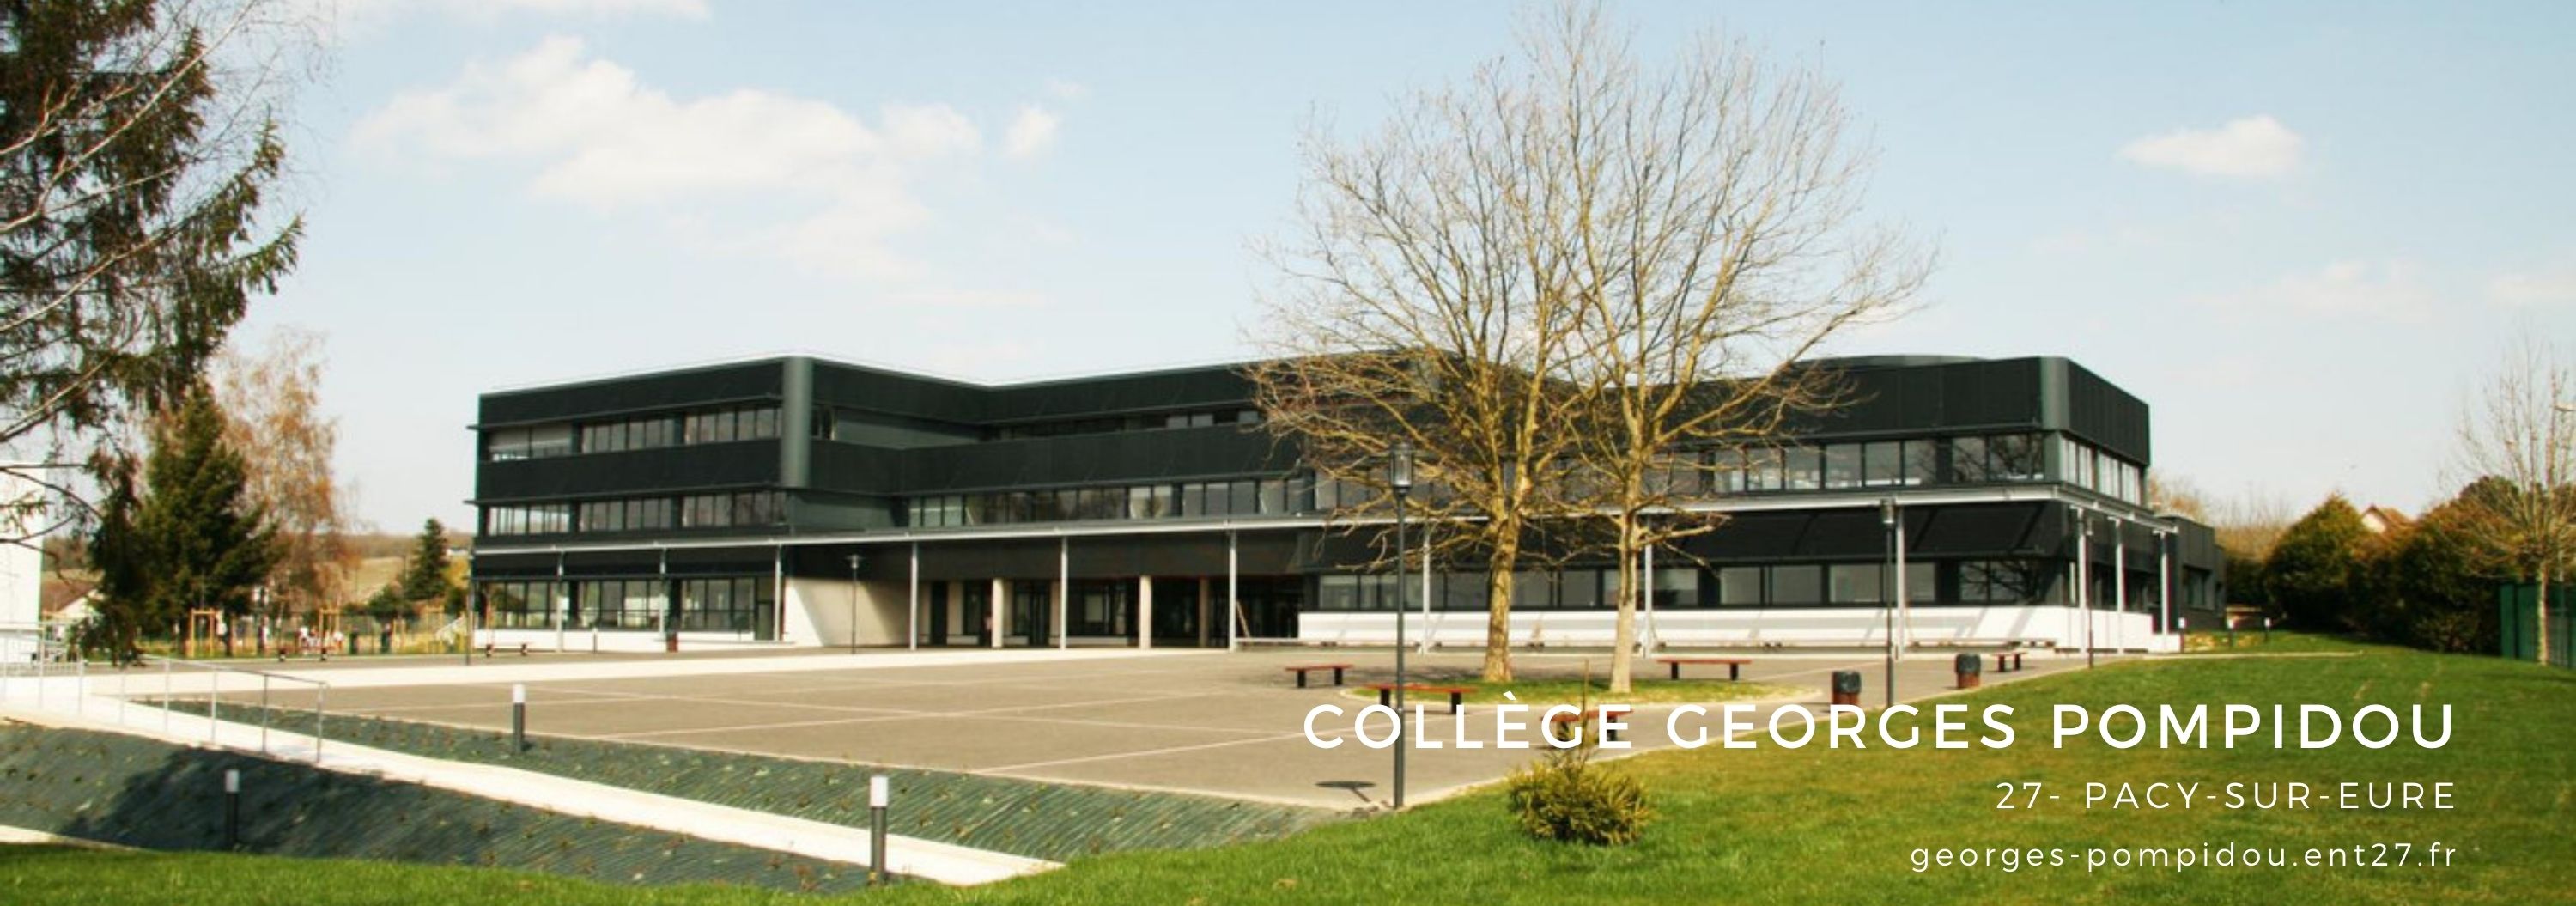 Headband Collège Georges Pompidou - Pacy-sur-Eure